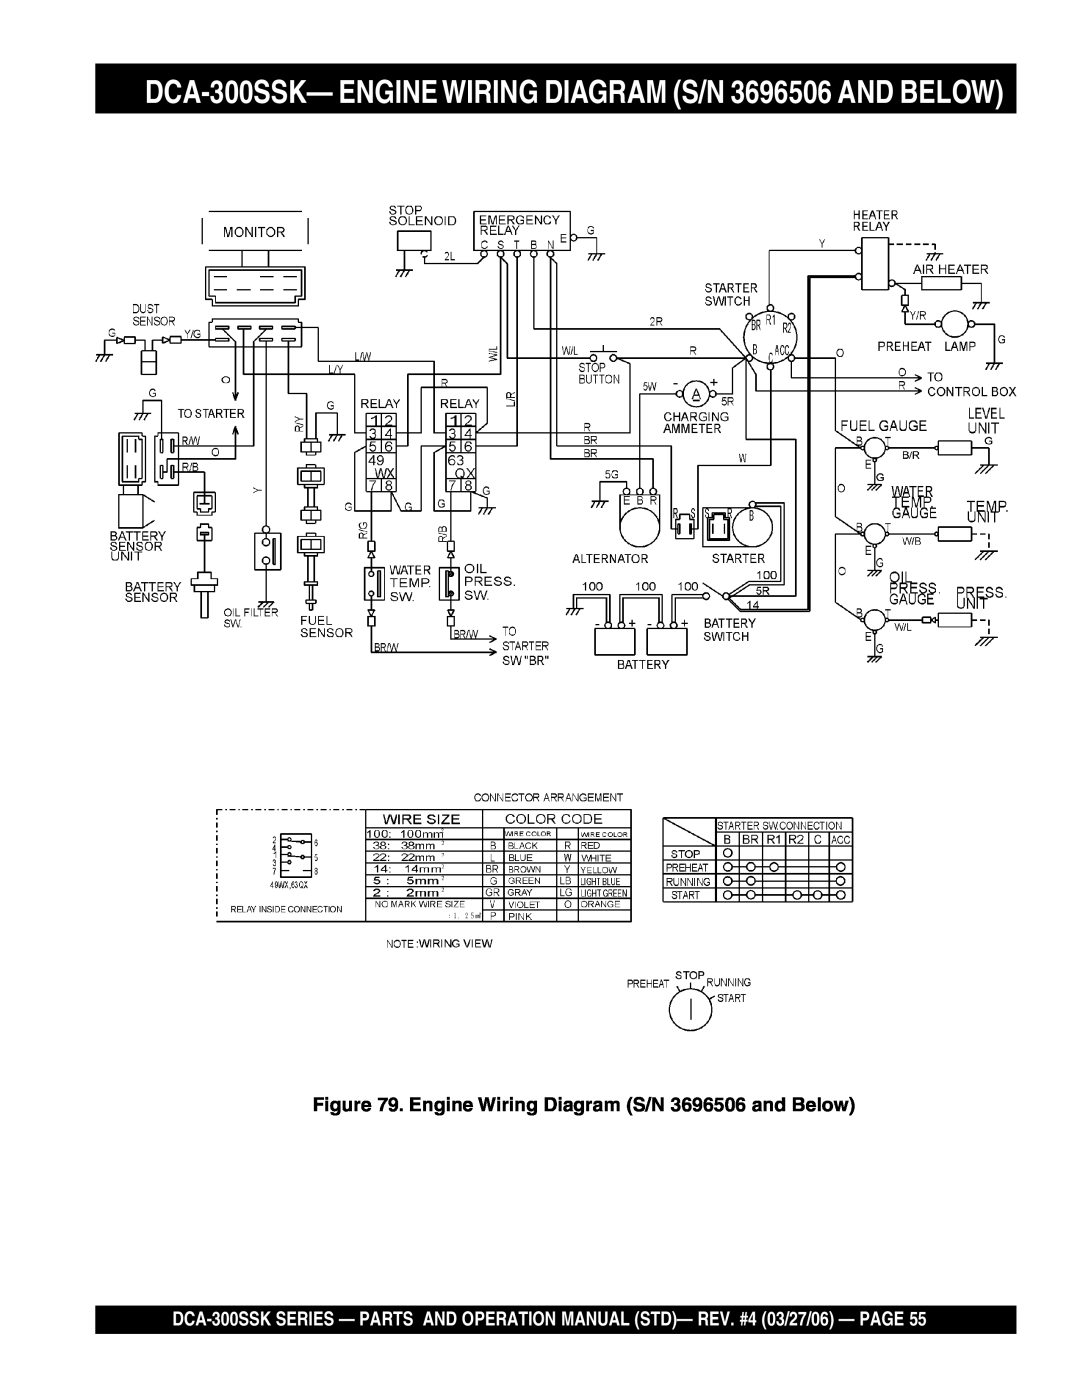 Multiquip manual DCA-300SSK- ENGINEWIRING DIAGRAM S/N 3696506 AND BELOW, Engine Wiring Diagram S/N 3696506 and Below 